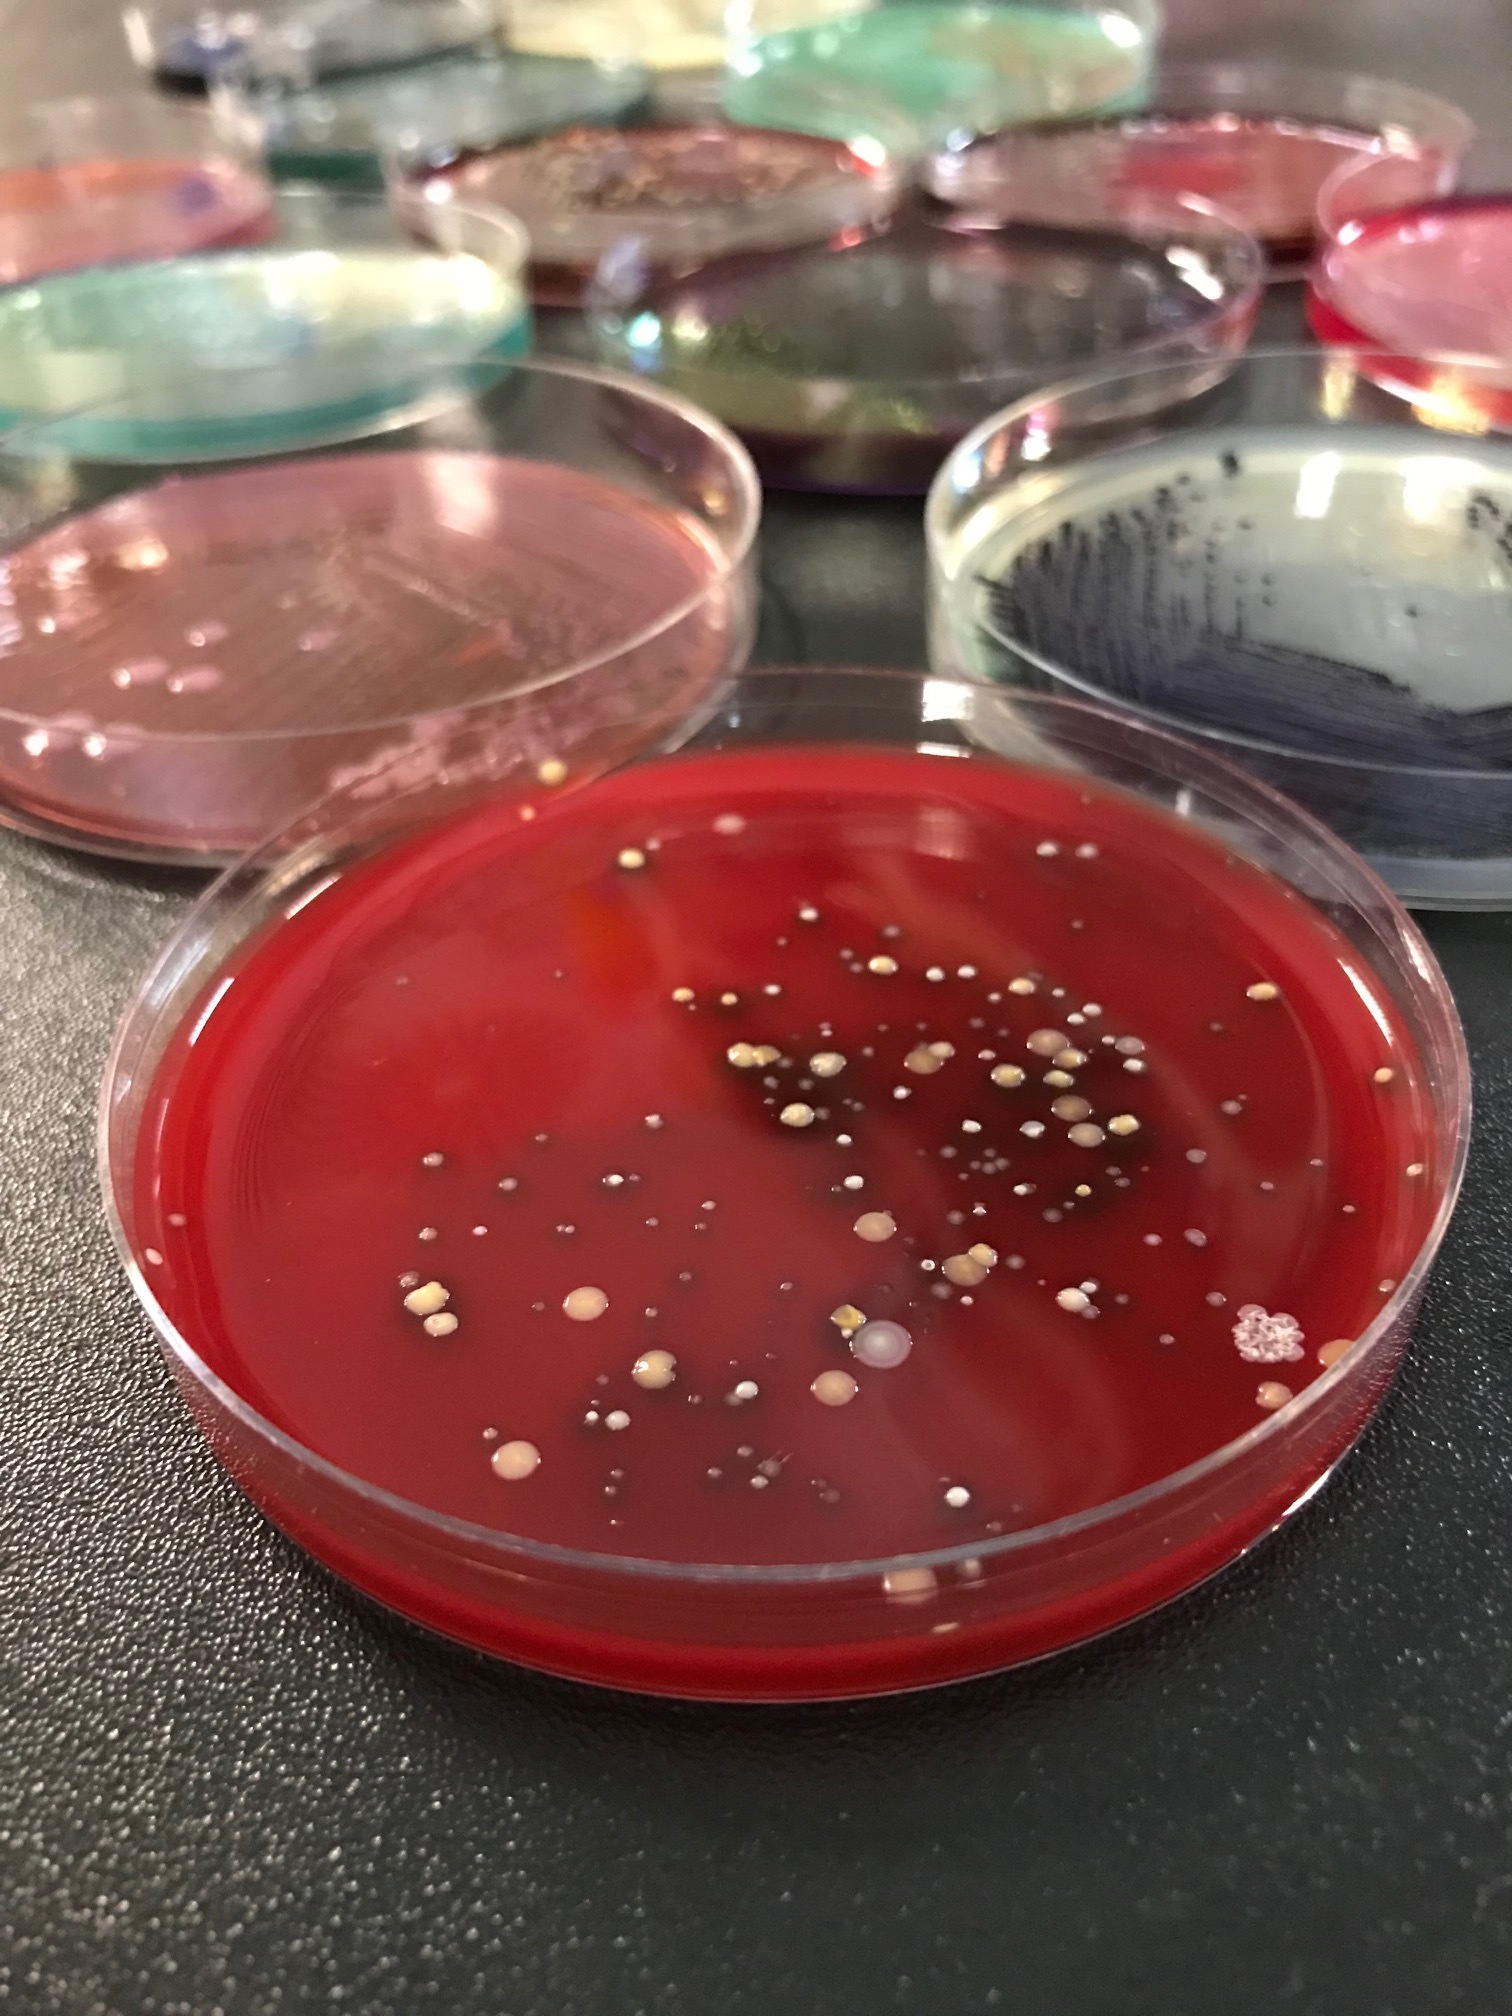 Throat microbes on blood agar. Photo credits to Calvin